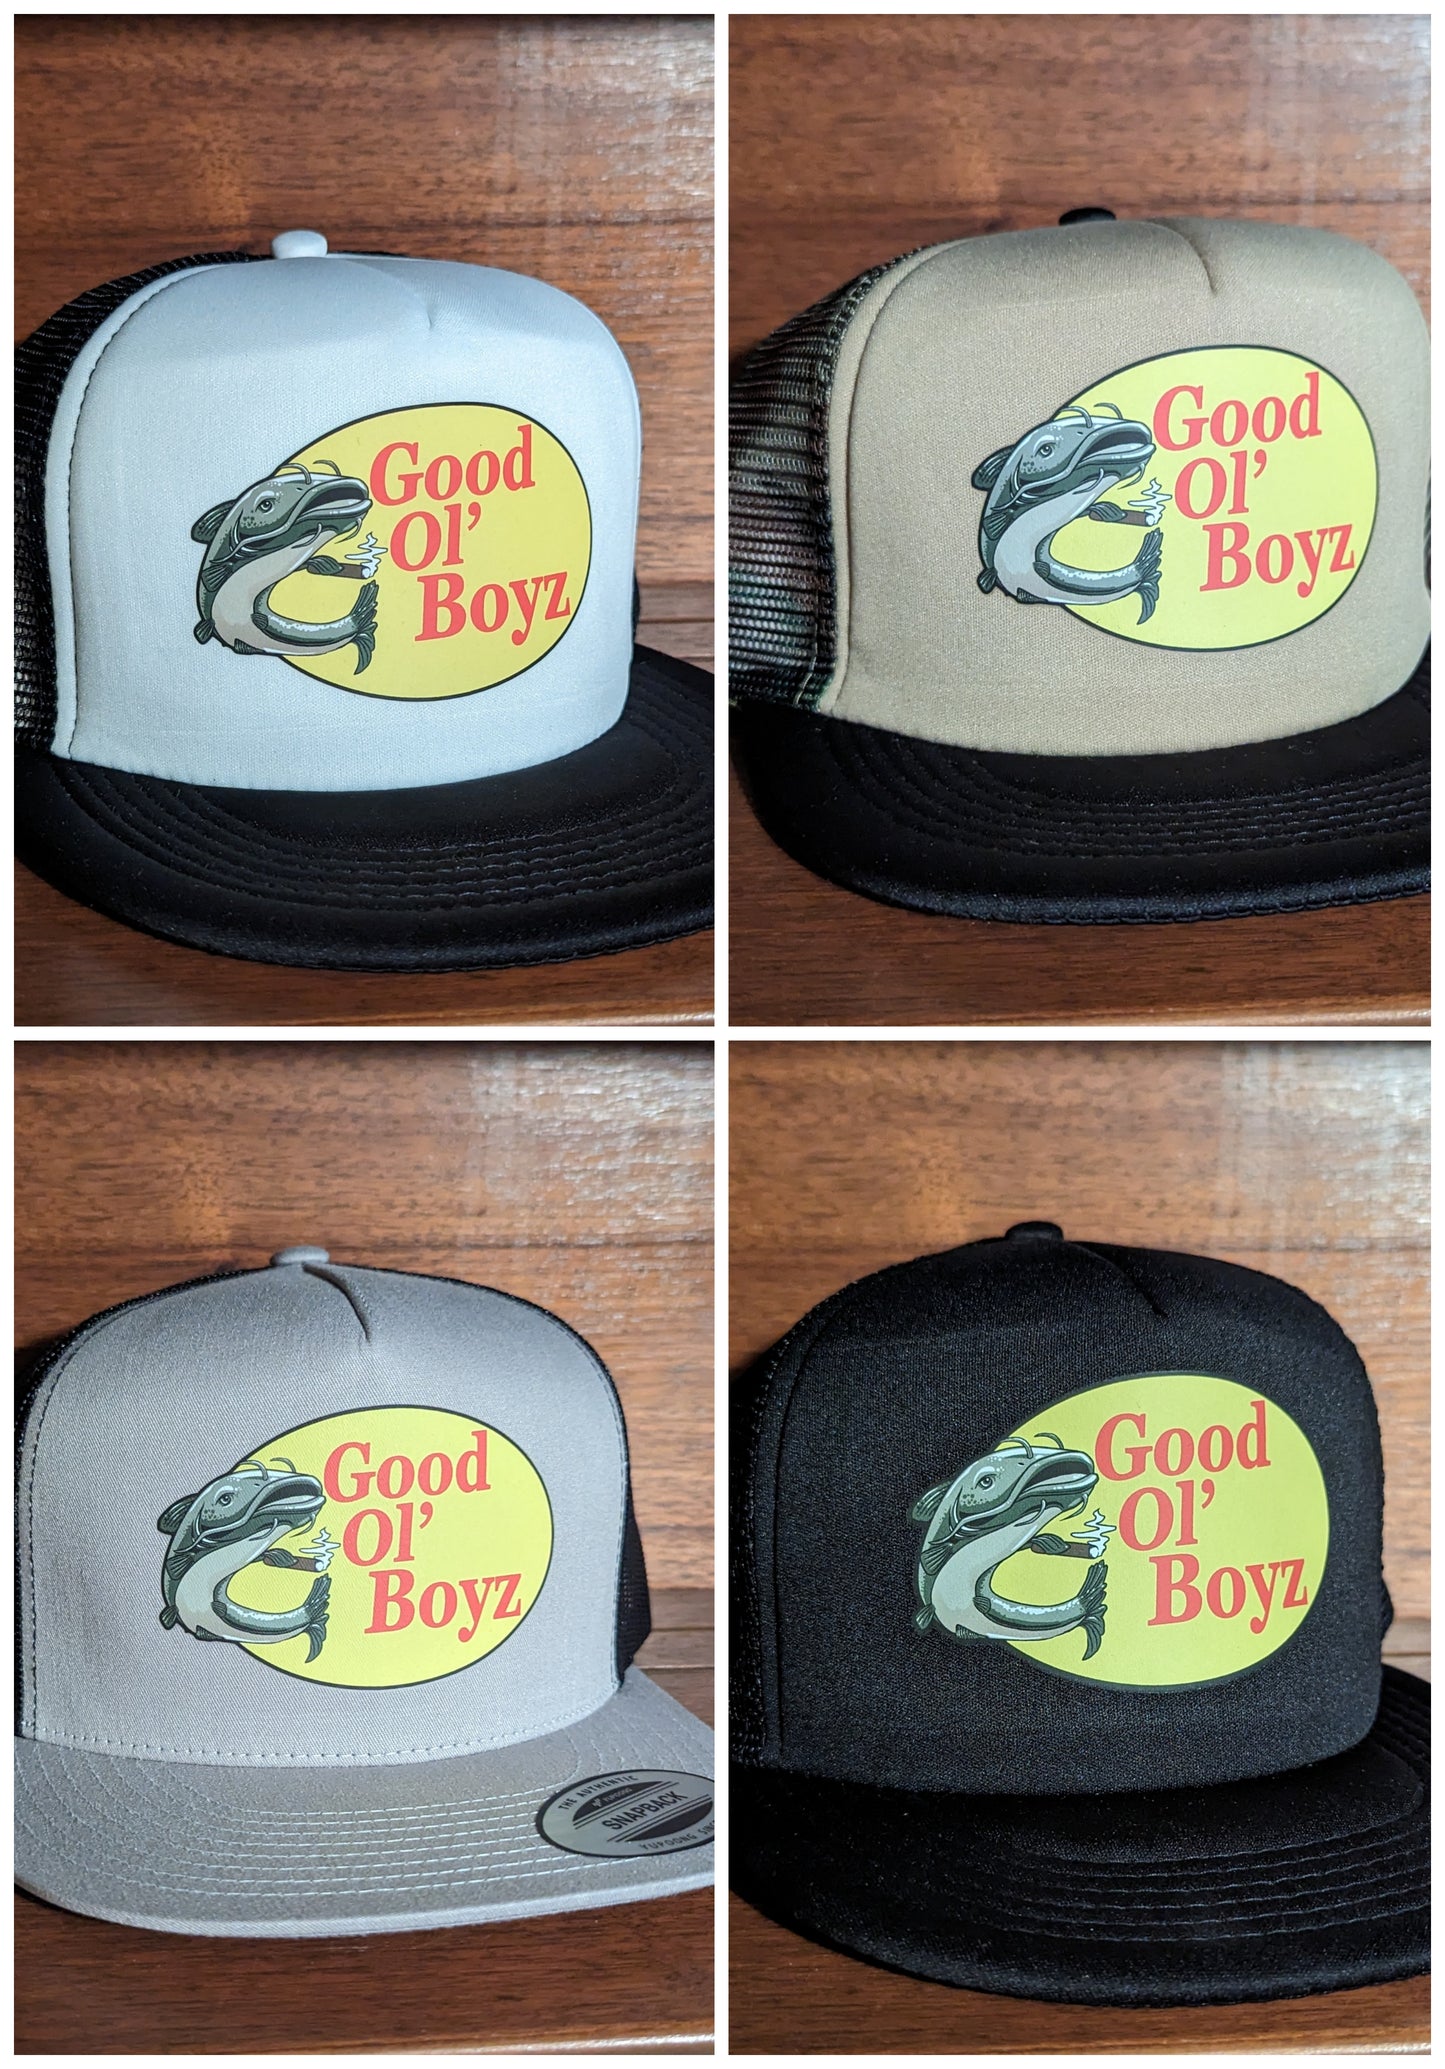 Good Ol' Boyz Netback Fishing Hat